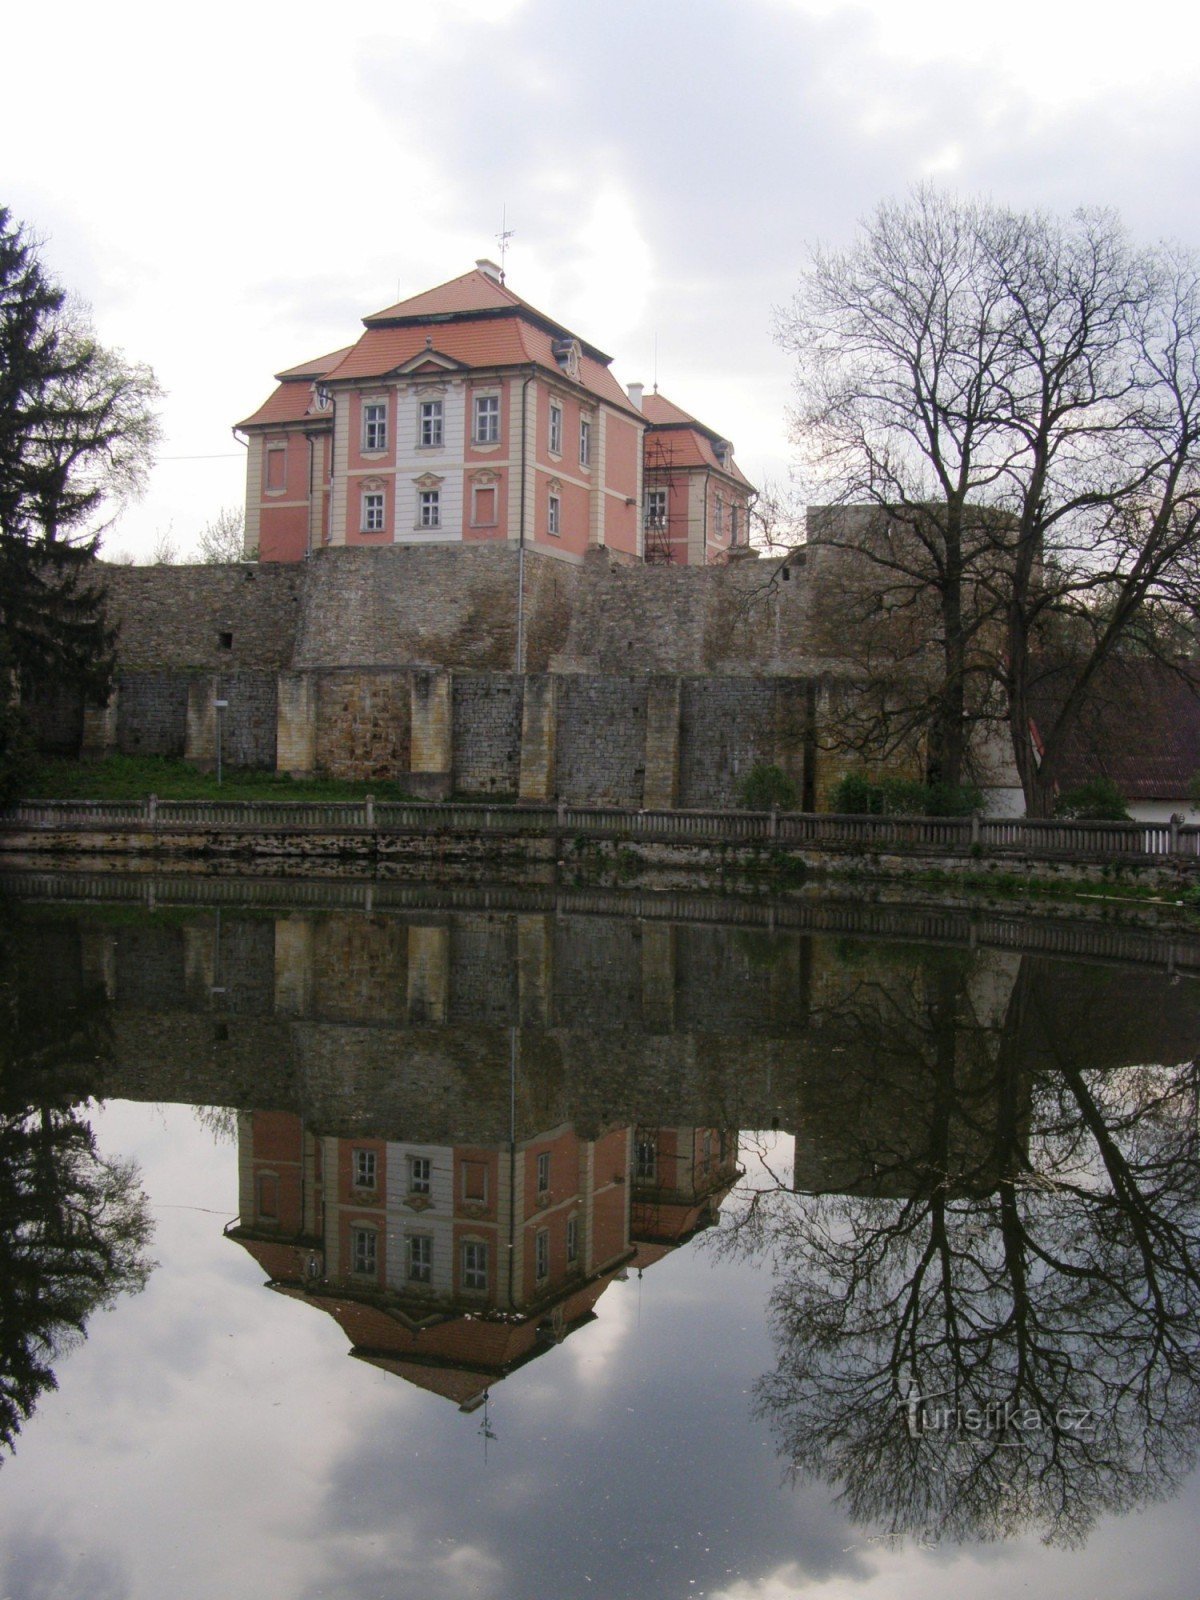 Chvalkovice - κάστρο